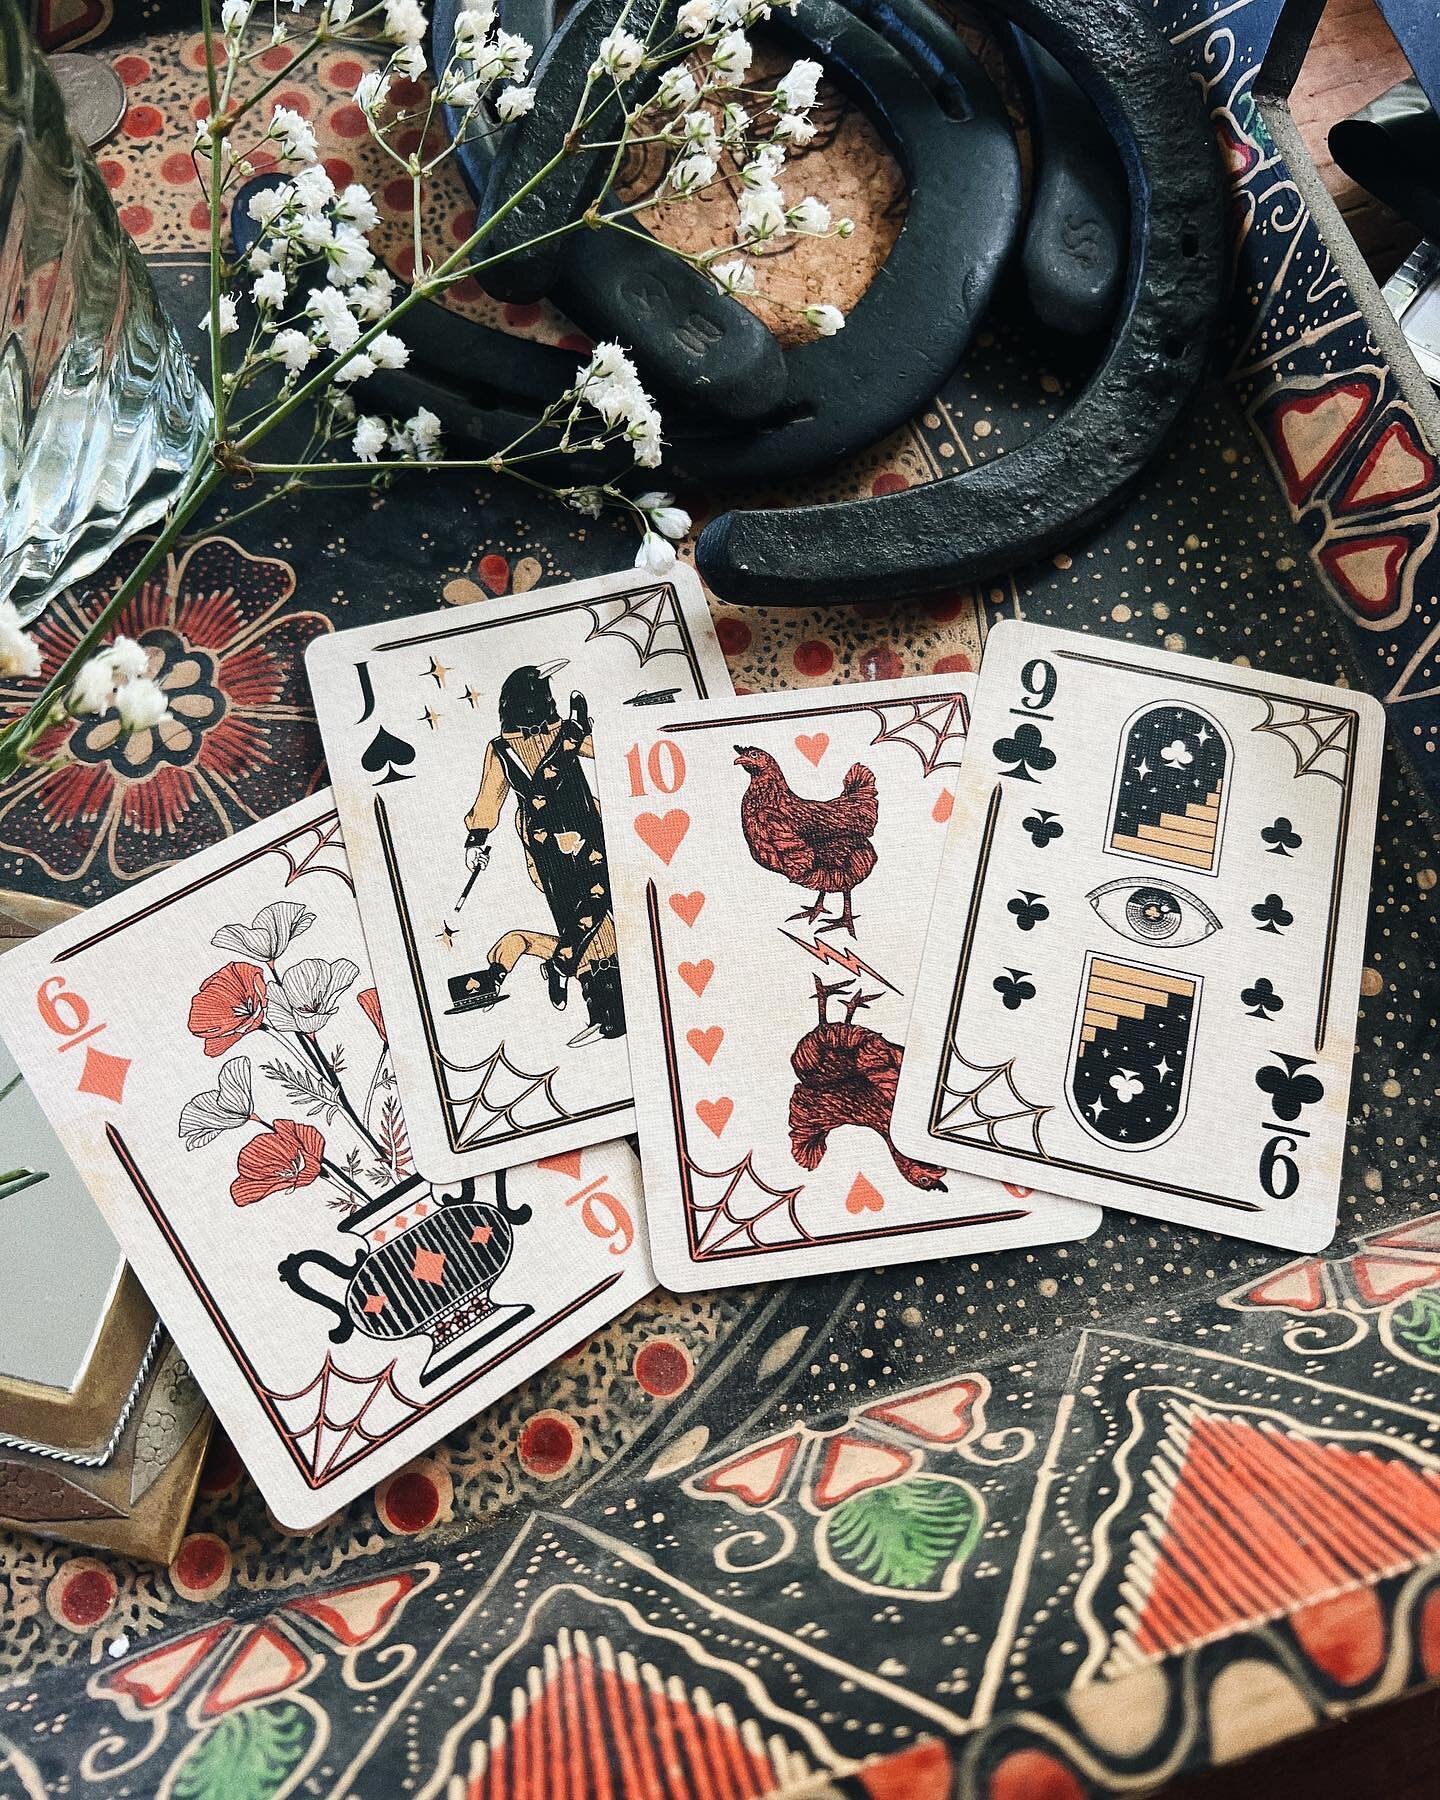 &hearts;️&clubs;️&diams;️&spades;️
.
.
.
.
.
.
.
.
.
.
.
.
.
#digitalart #poker #playingcards #carddeck #crow #chicken #cardgame #procreate #digitalillustration